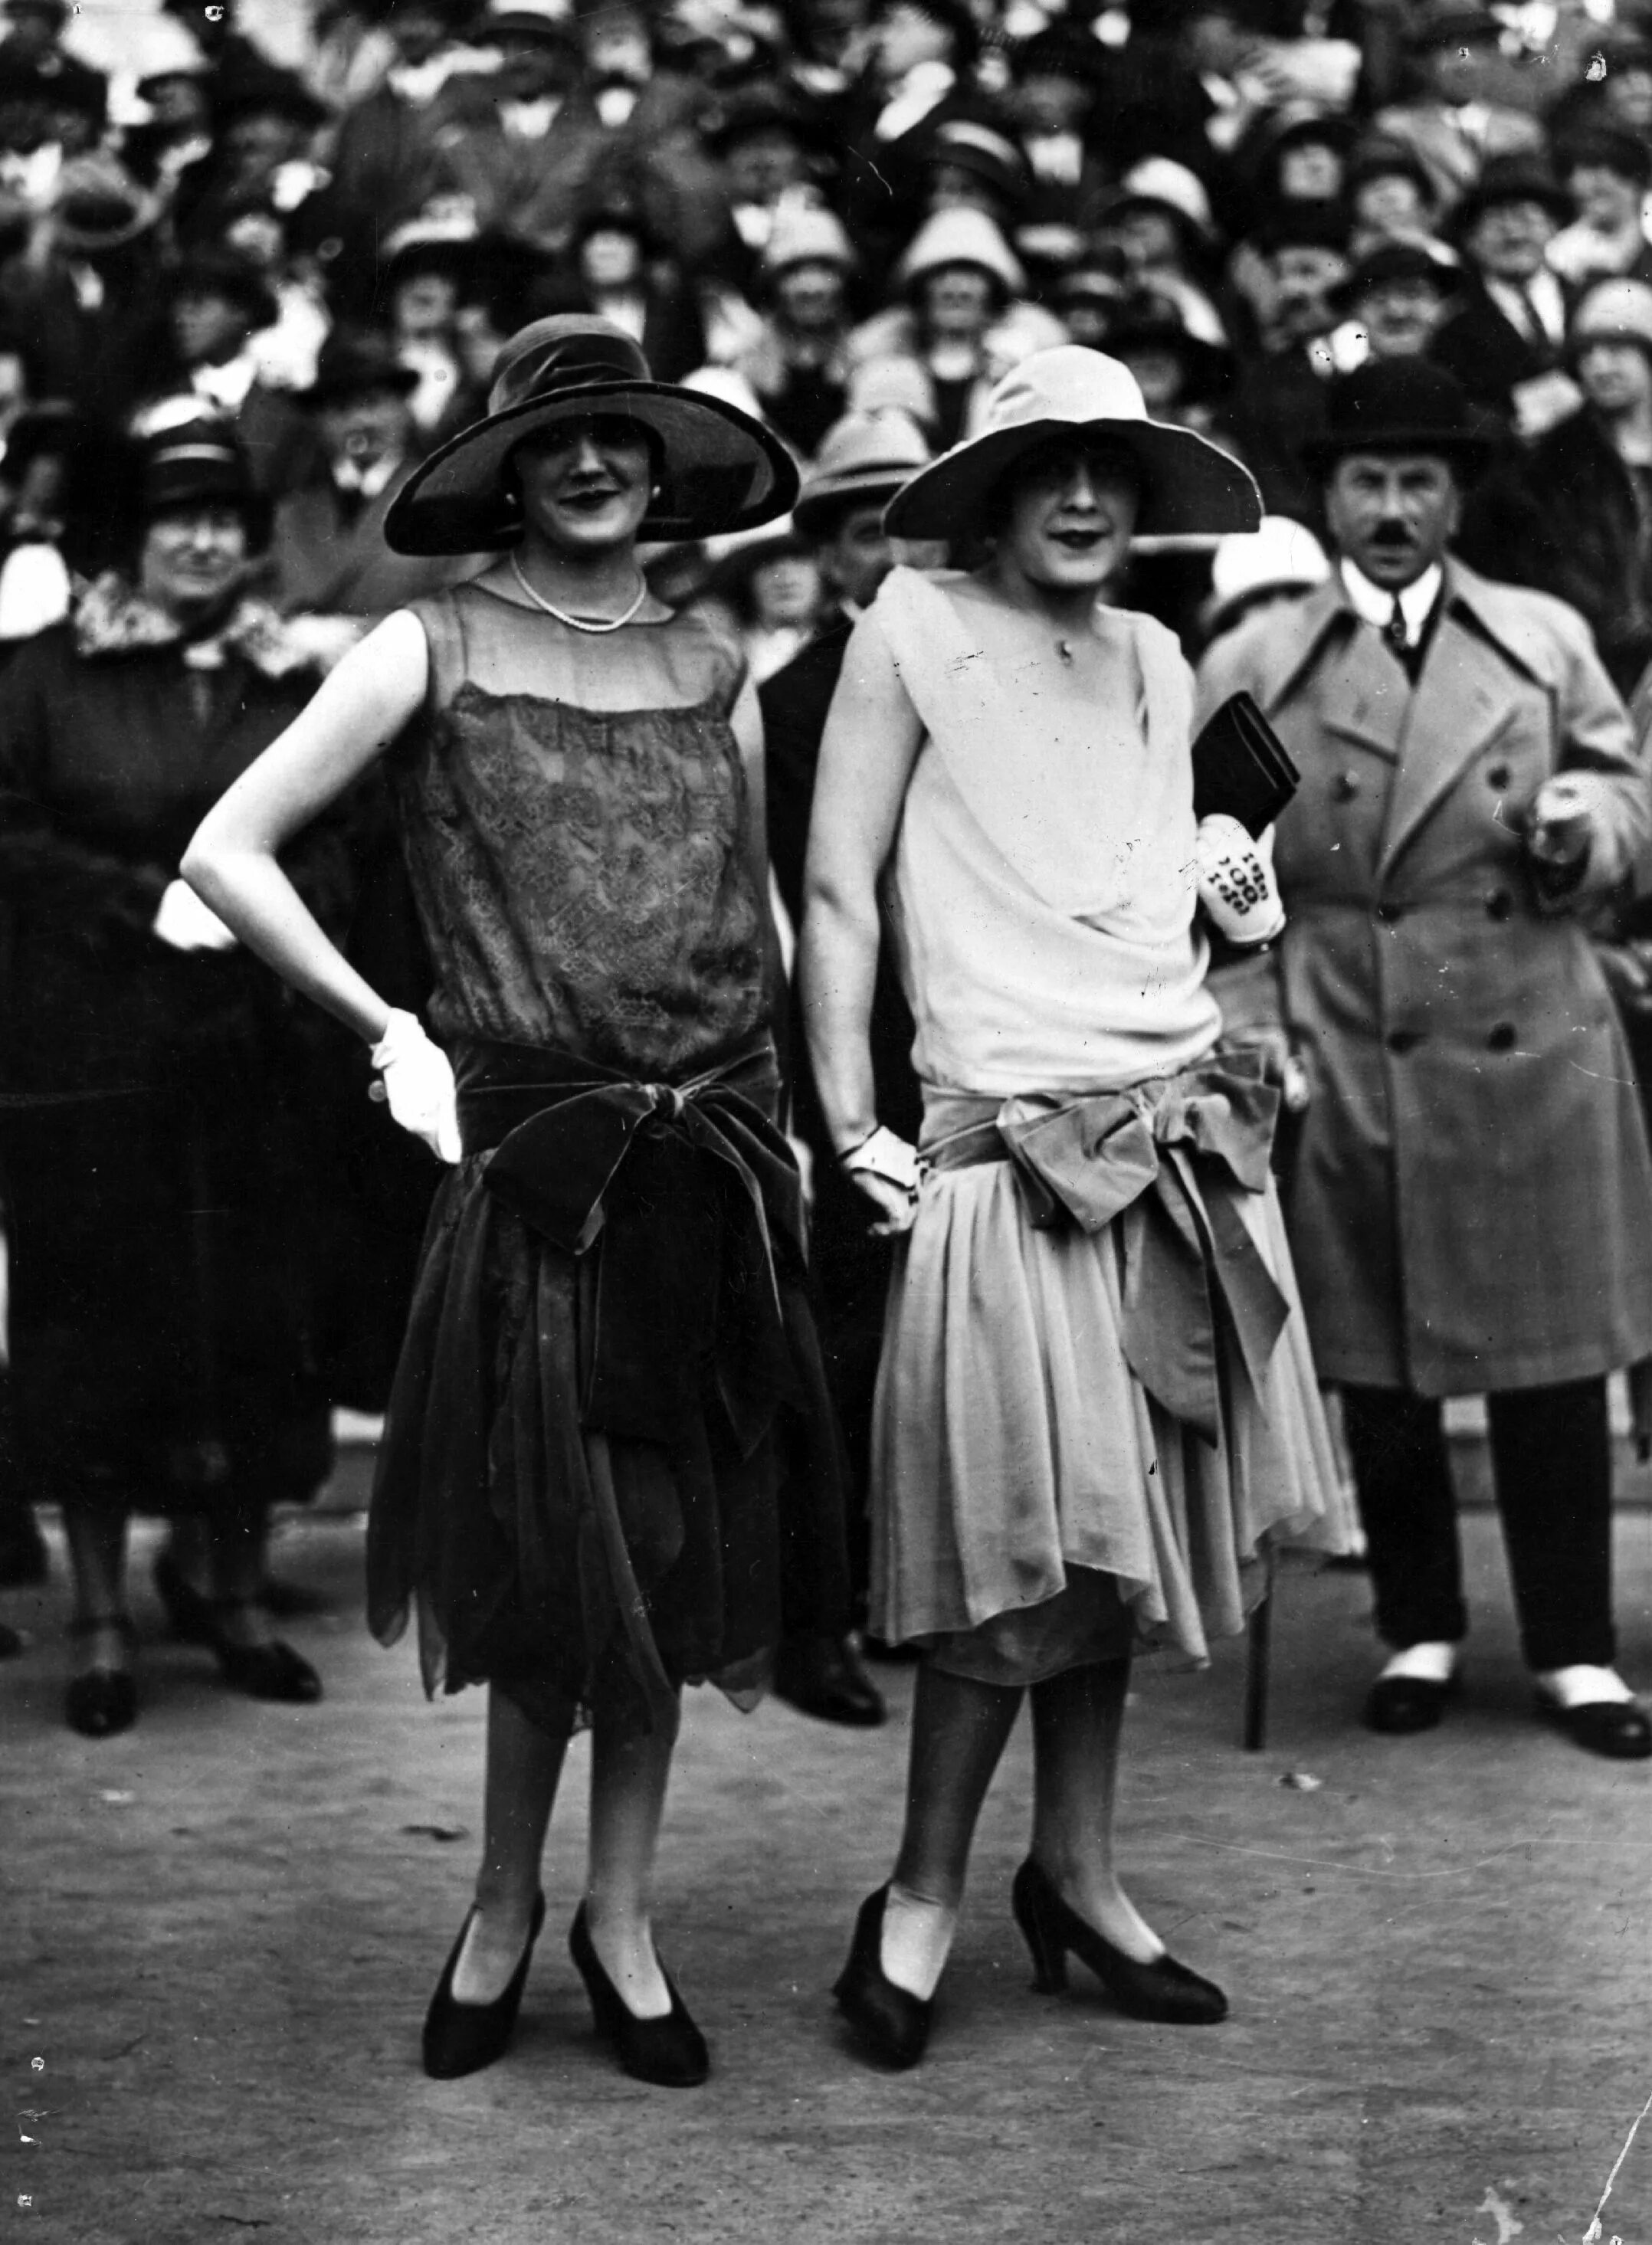 В 20 годы был стиль. Мода 20х Англия. Мода Англии 20-х годов. Мода 20х в Австралии. Женщины 1920s Англия.